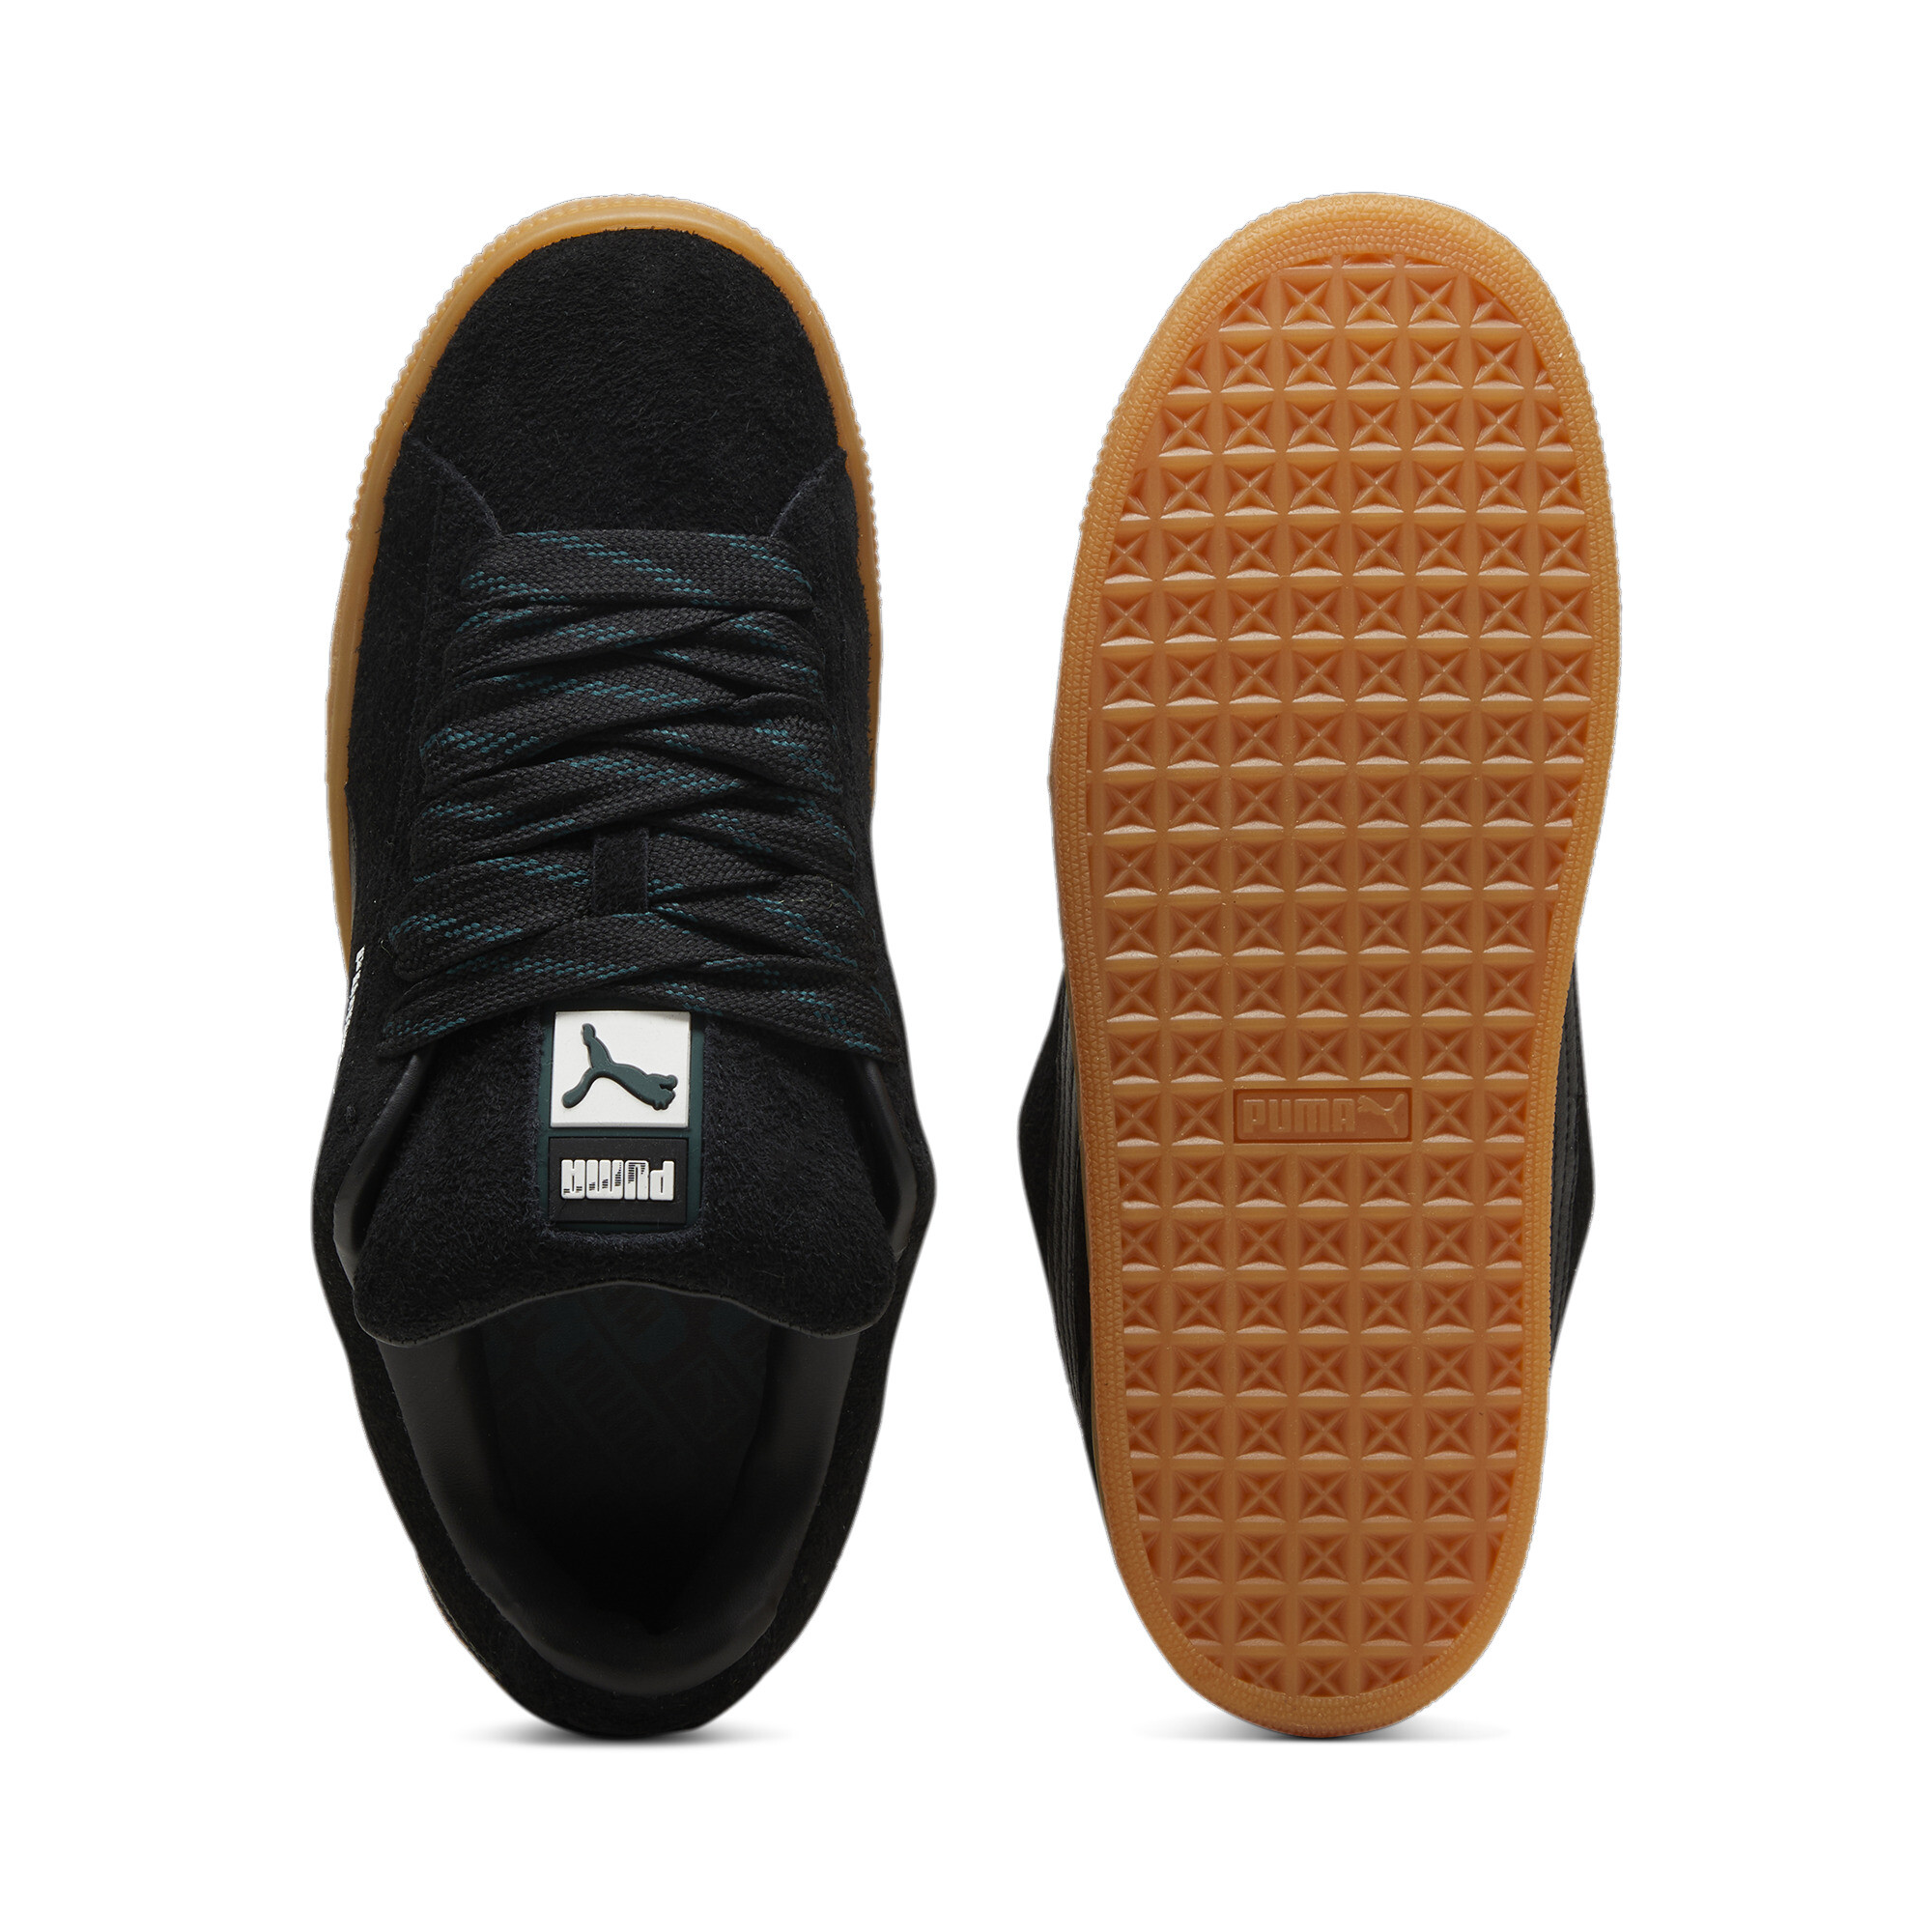 Puma Suede XL Flecked Unisex, Black, Size 35.5, Shoes